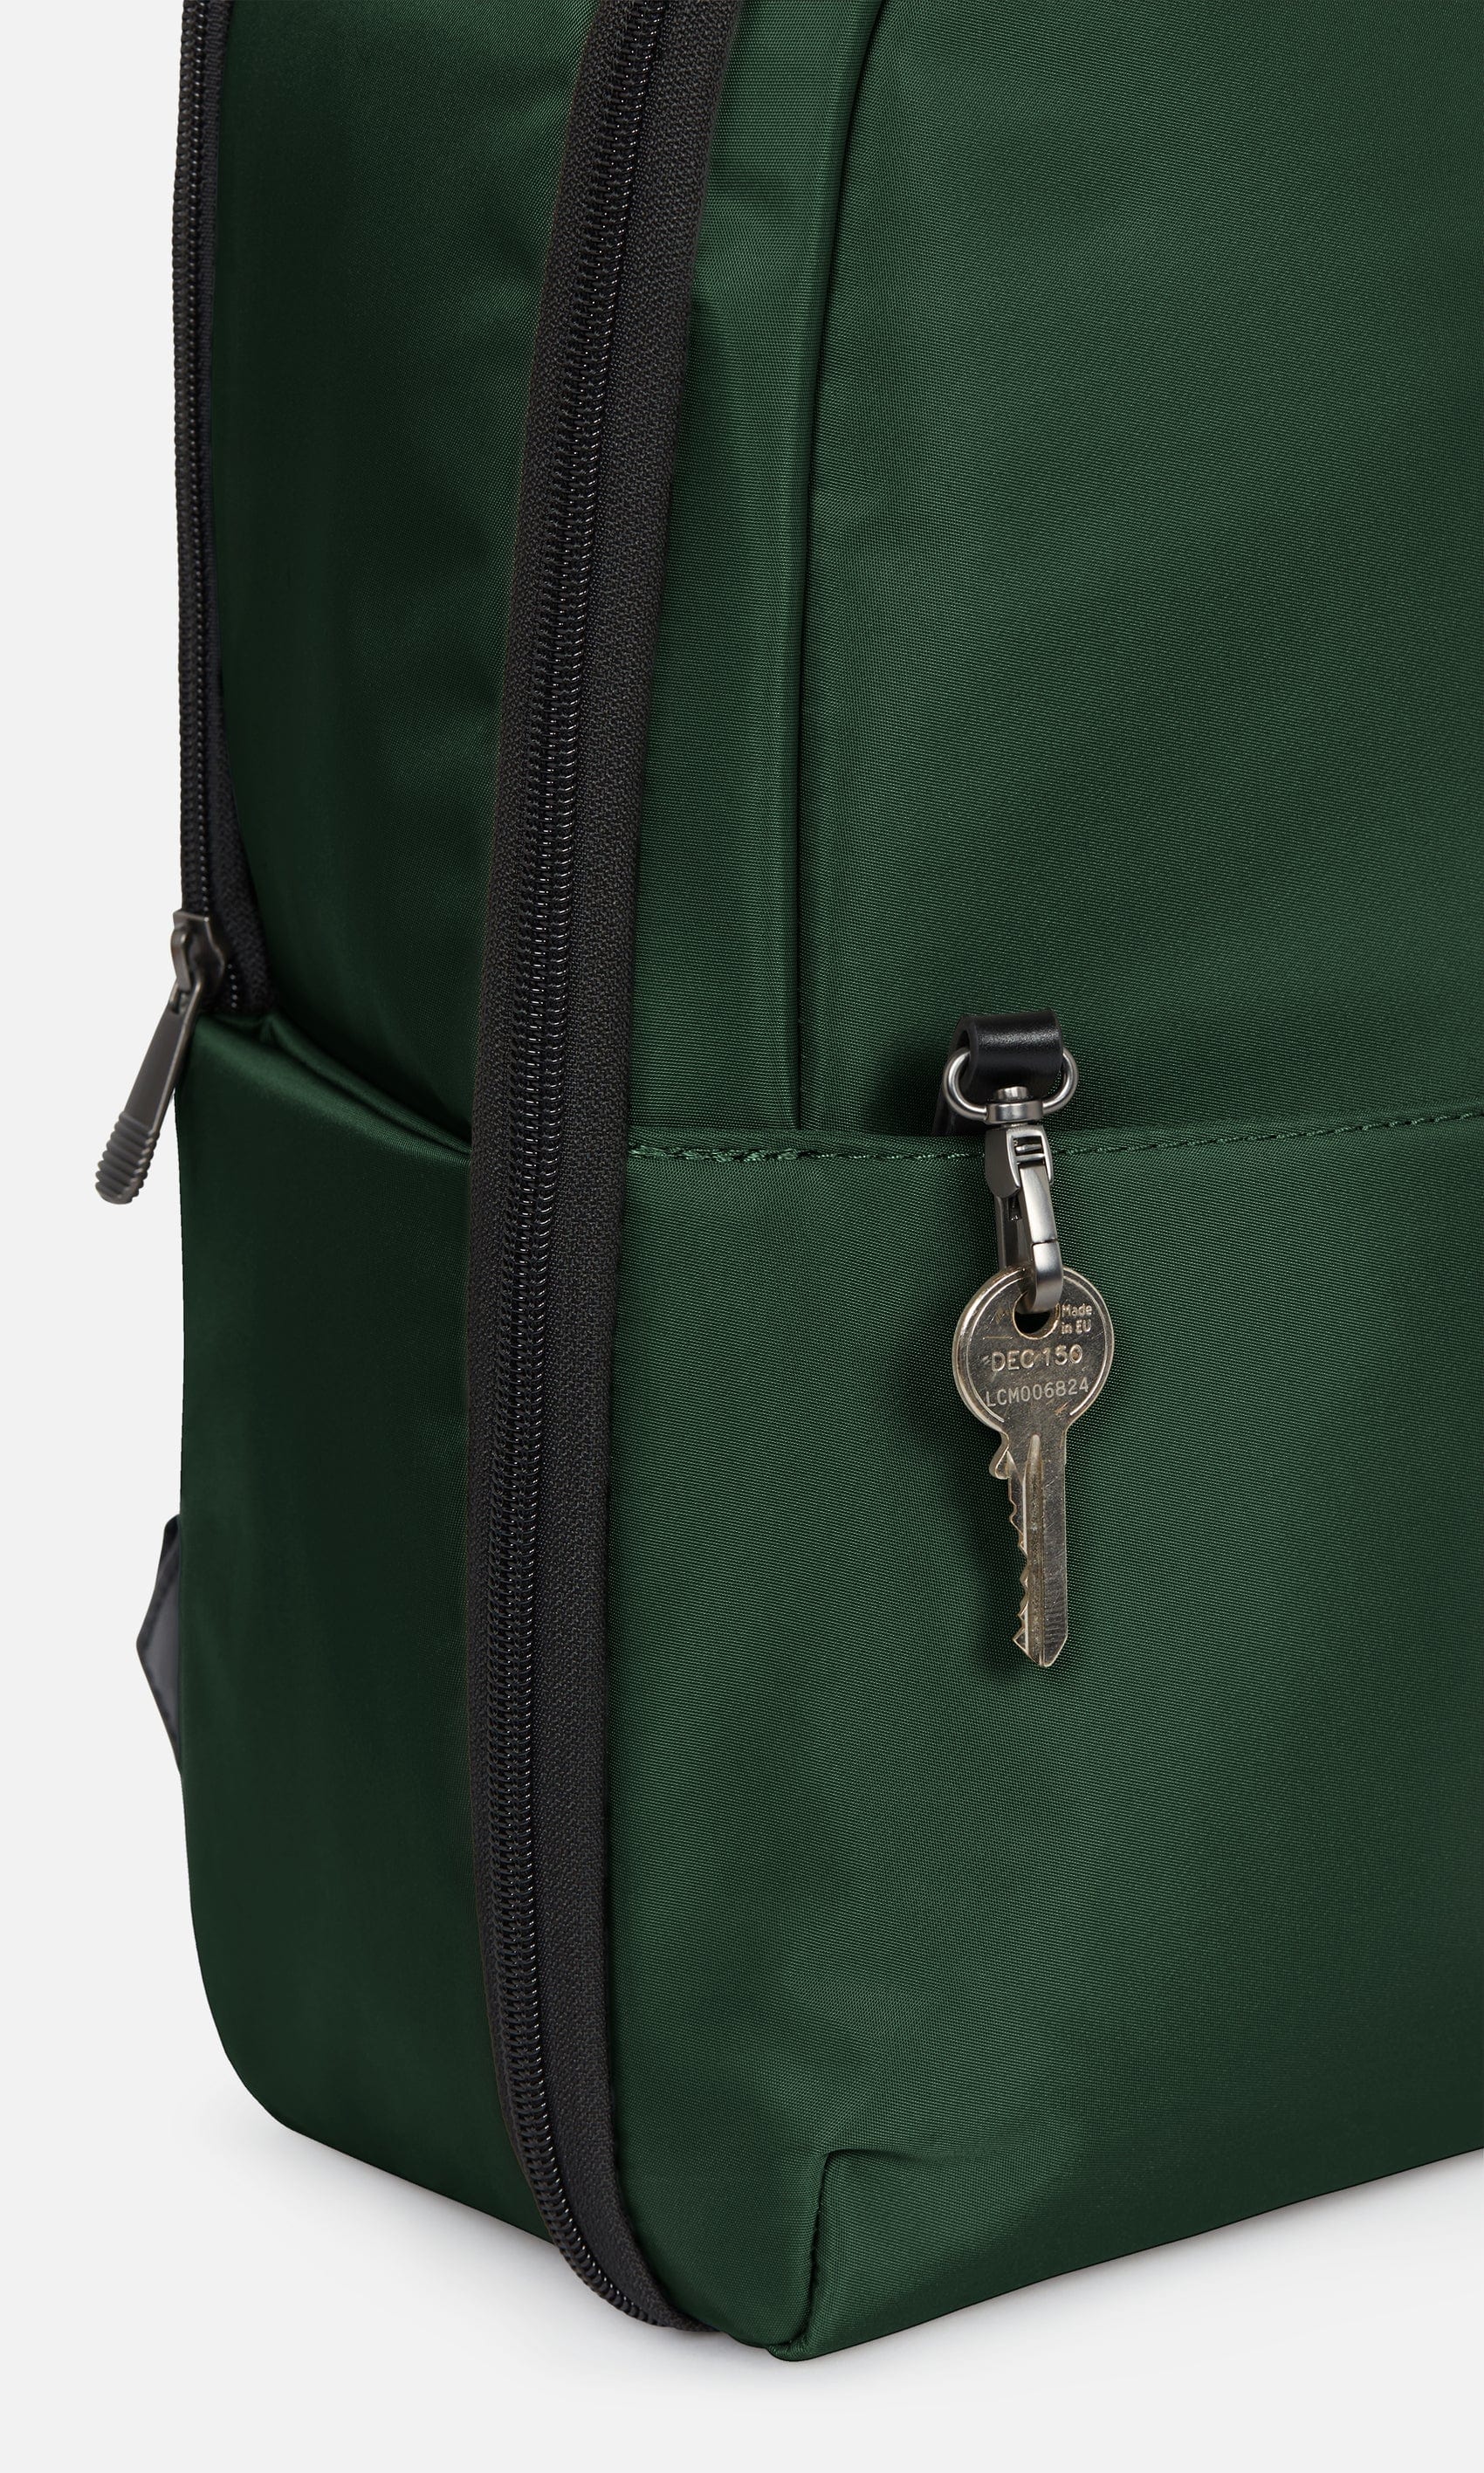 Antler Luggage -  Chelsea backpack in woodland green - Backpacks Chelsea Backpack Green | Travel & Lifestyle Bags | Antler UK